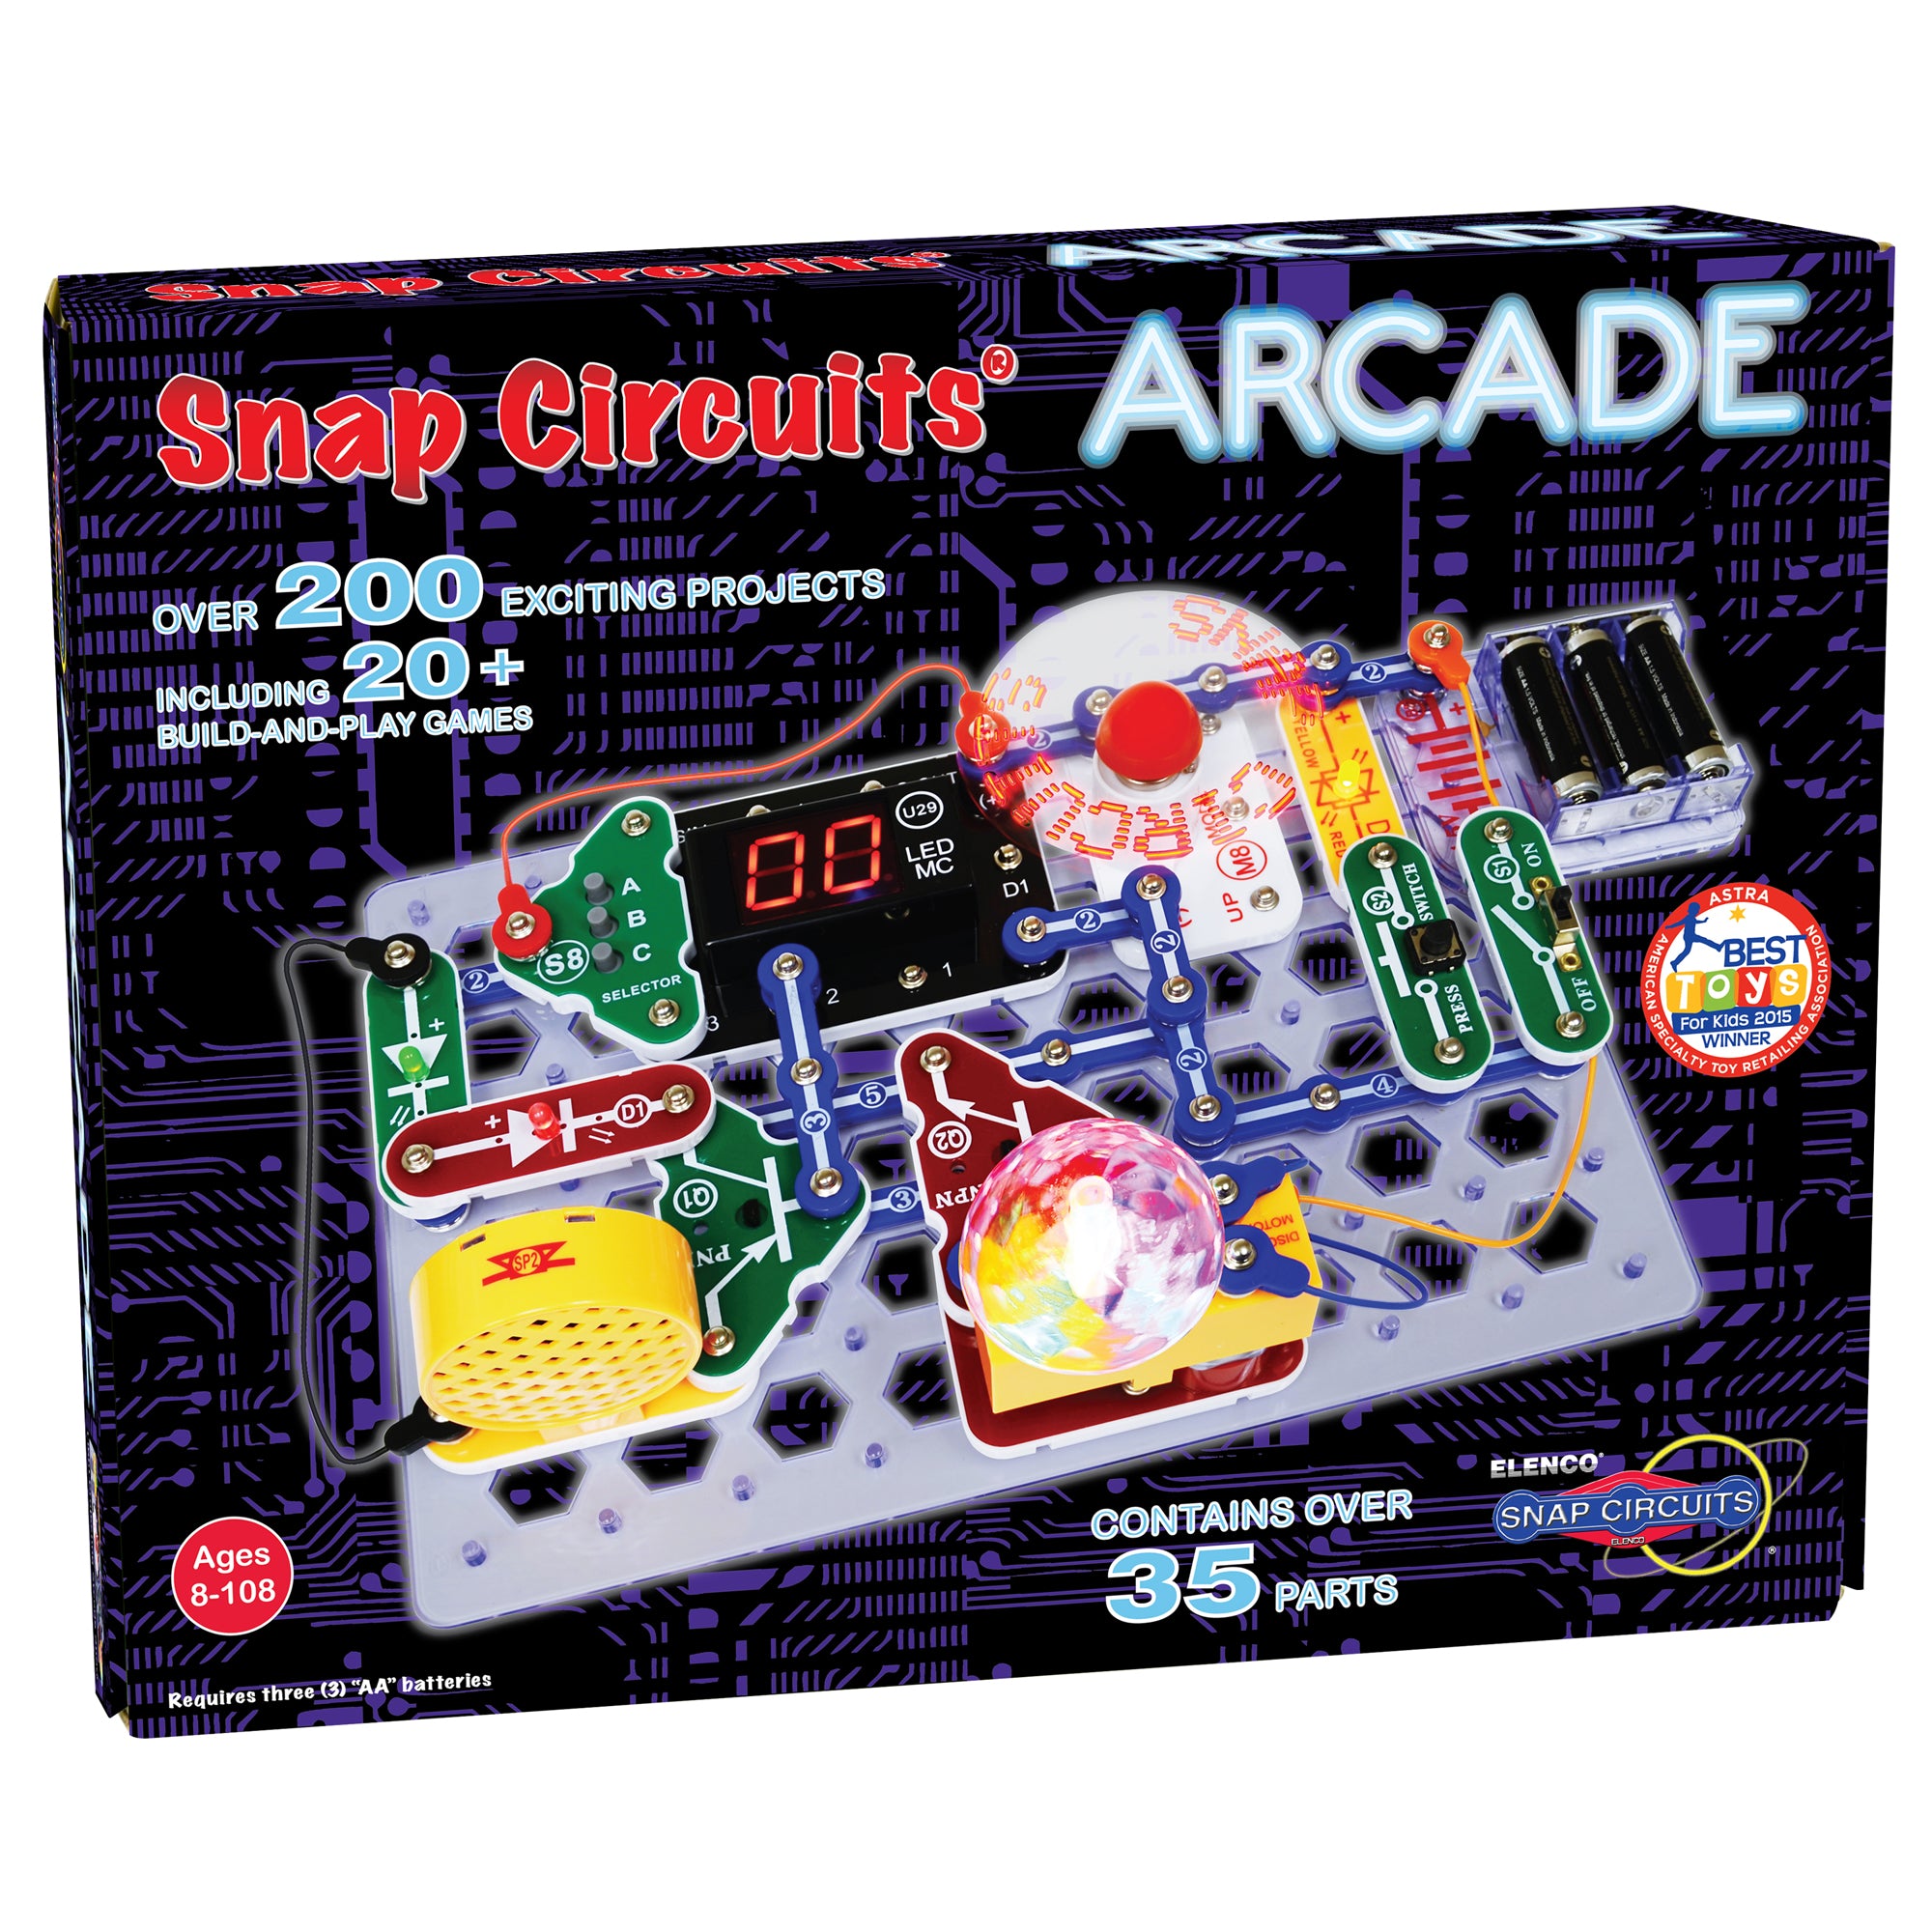 Arcade Snap Circuits